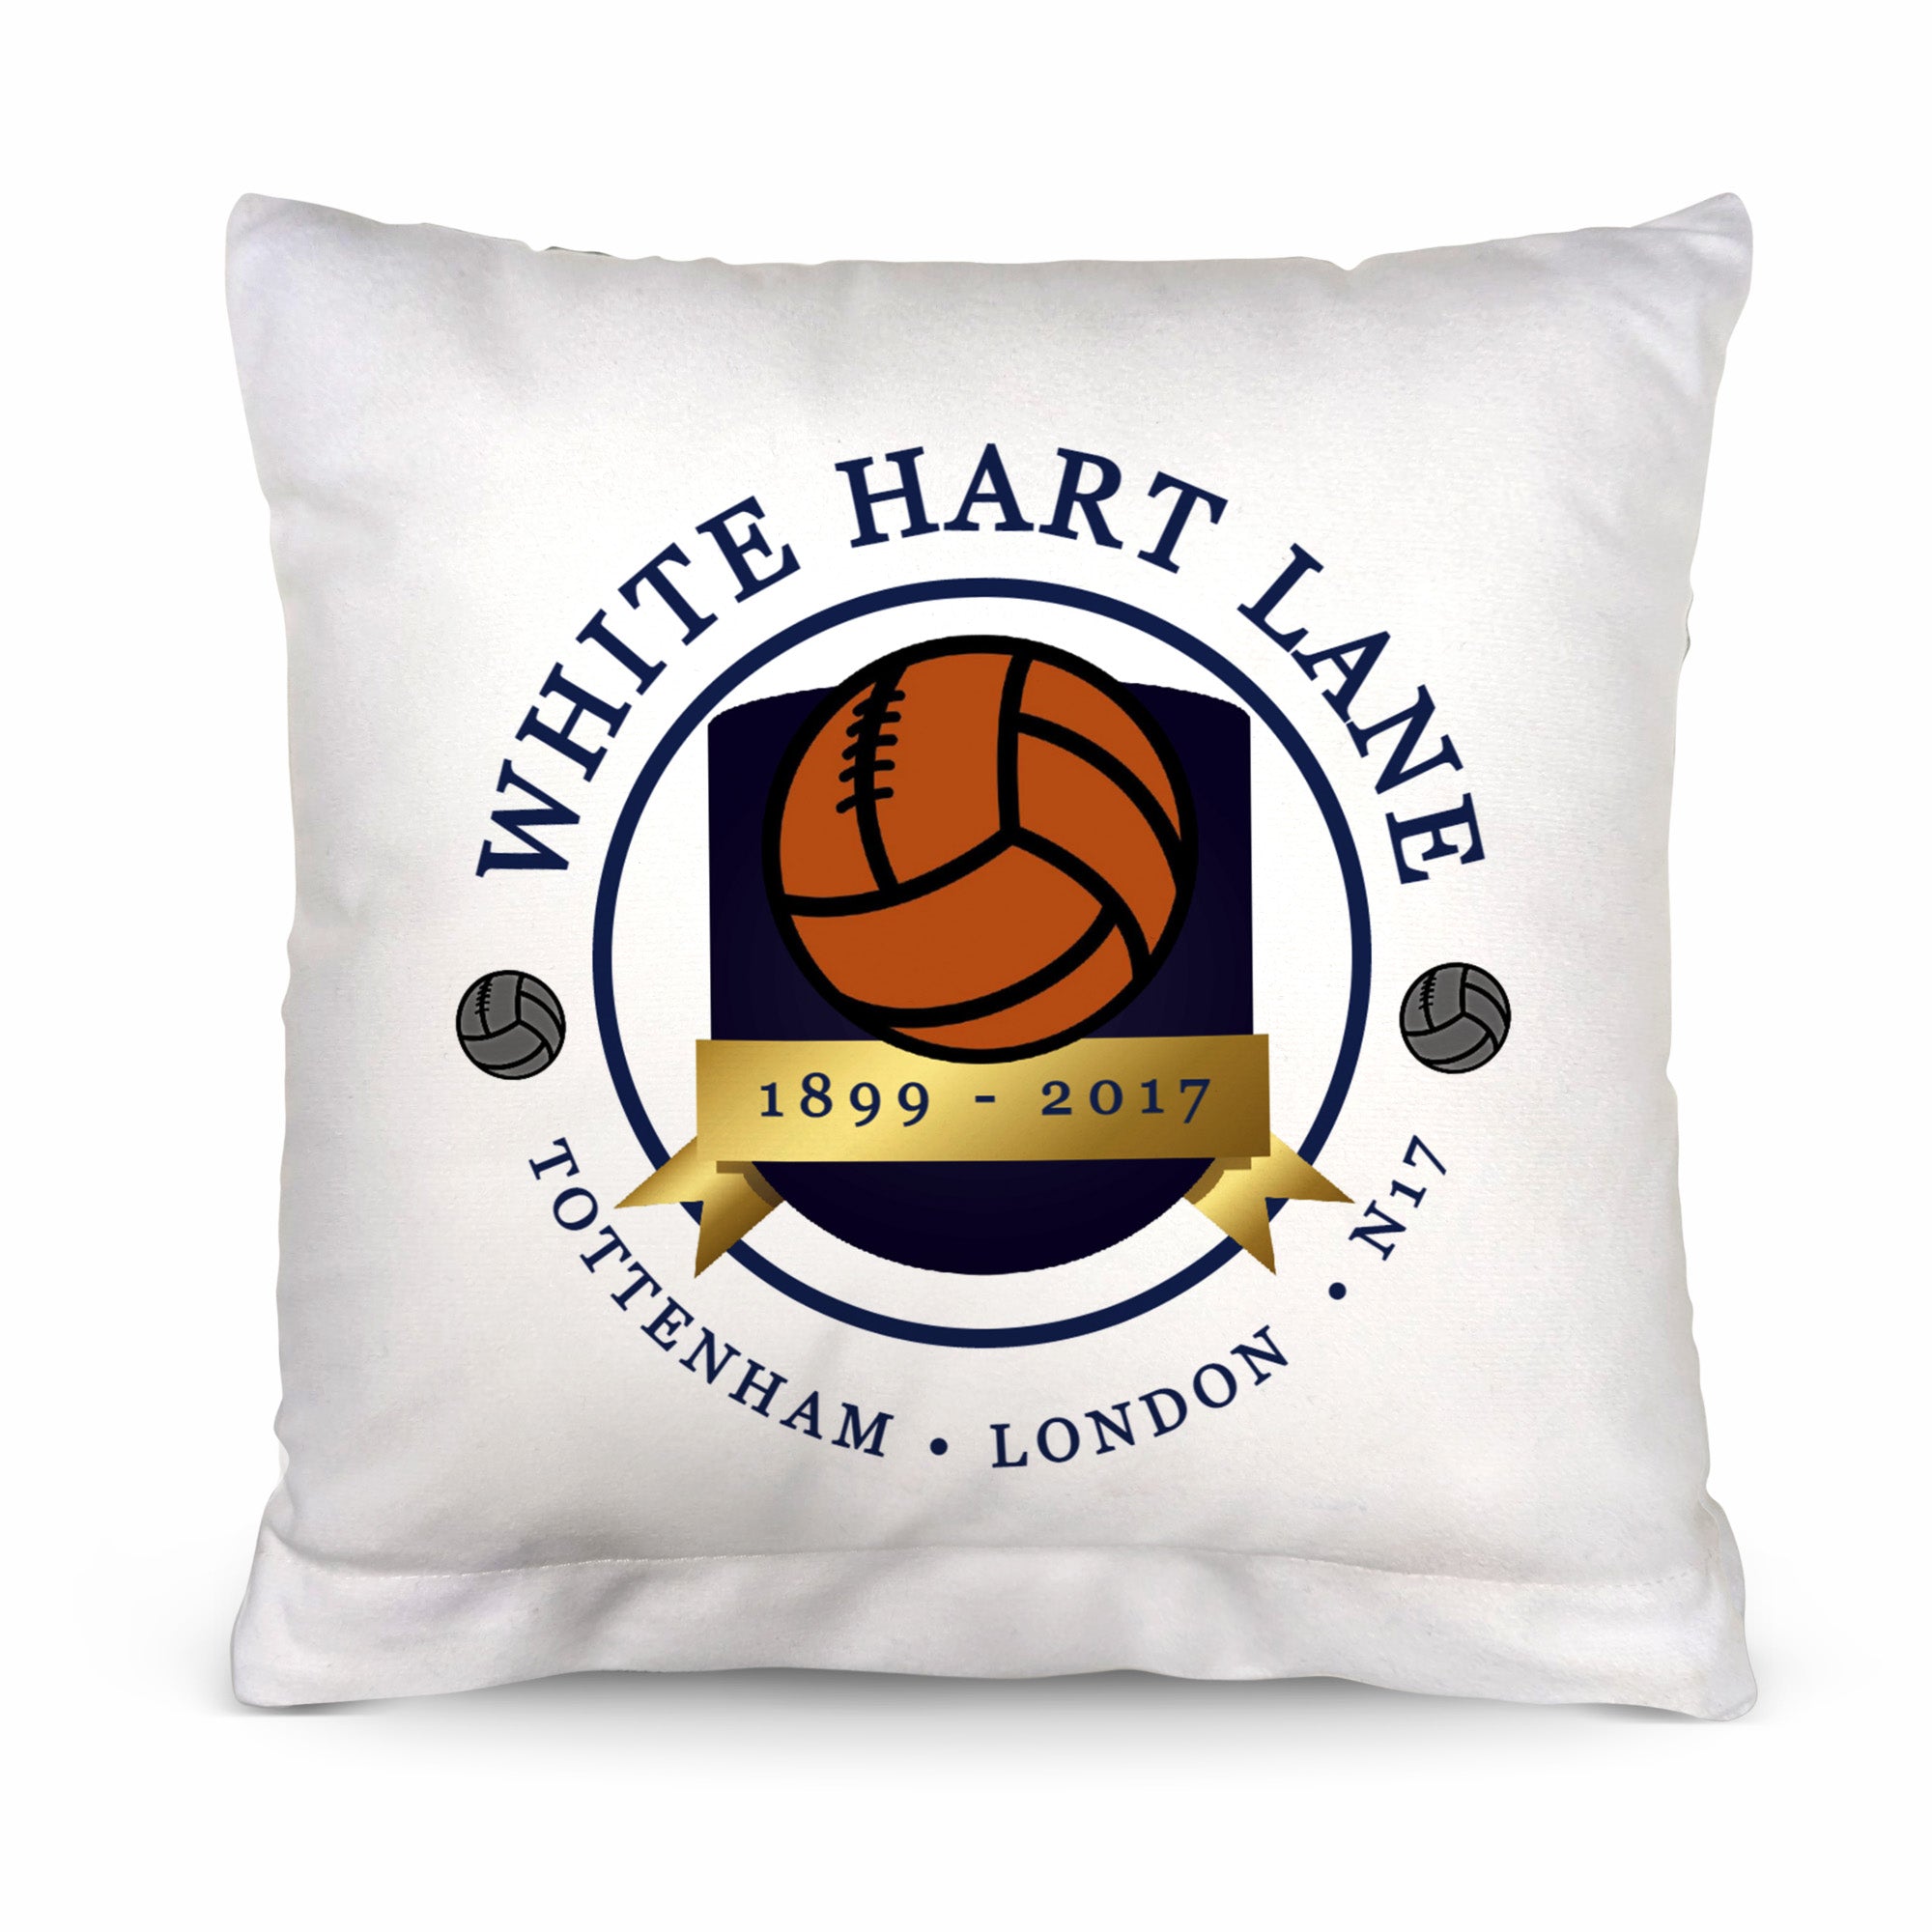 Totts White Hart Lane - Football Legends - Cushion 10"